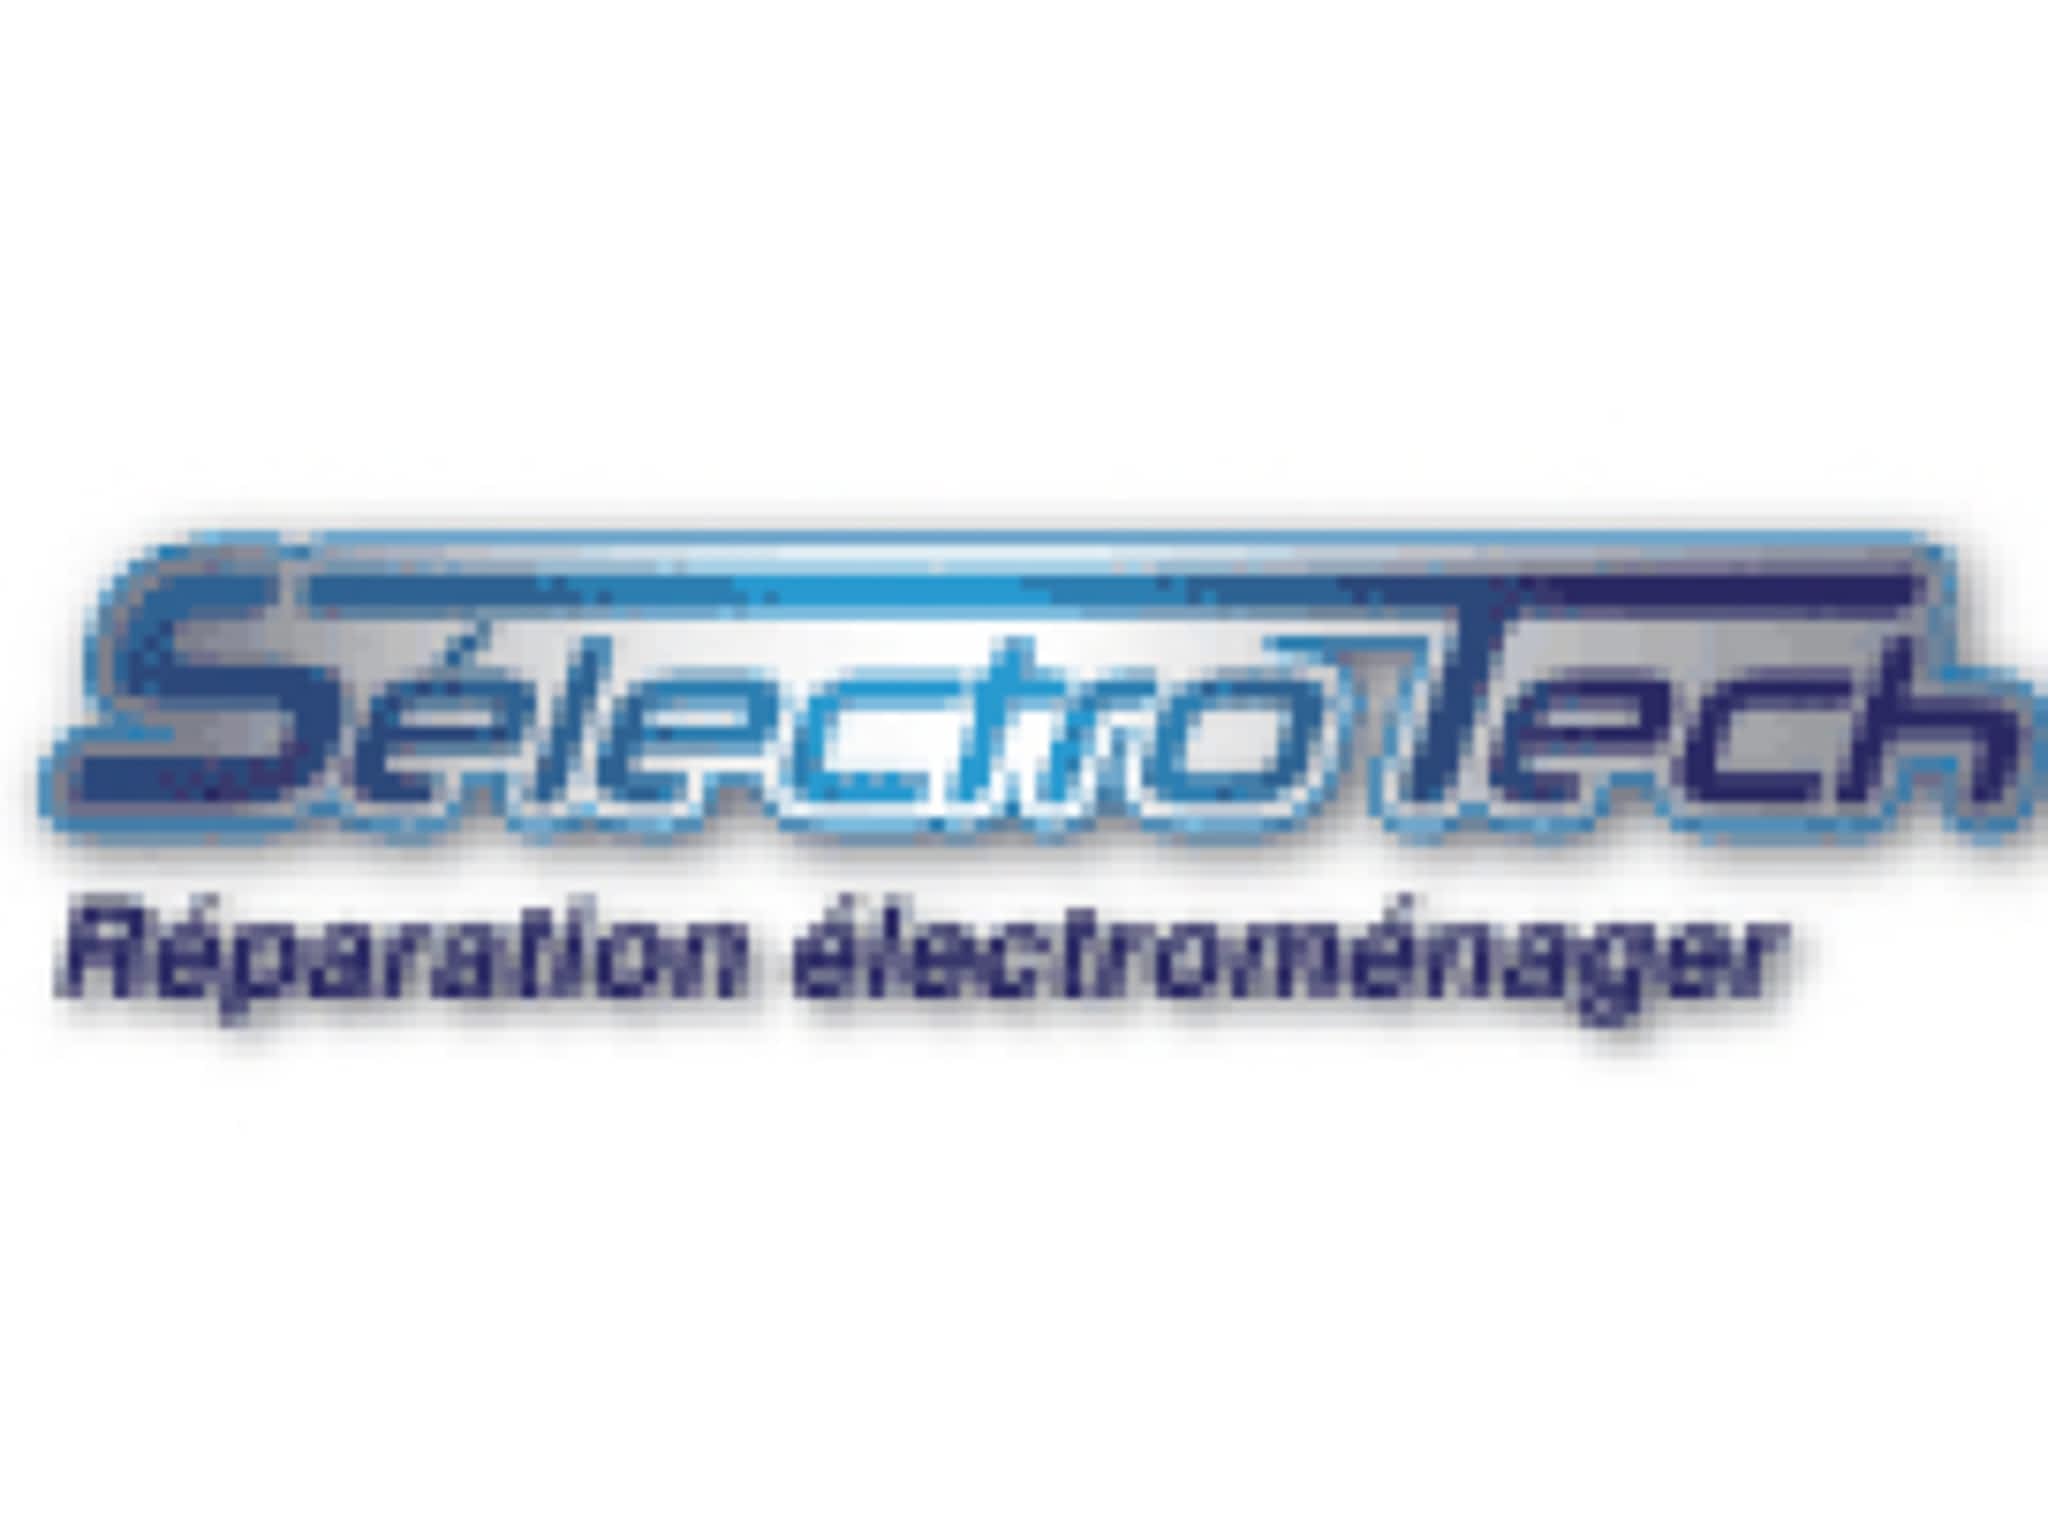 photo SélectroTech Réparation Électroménager